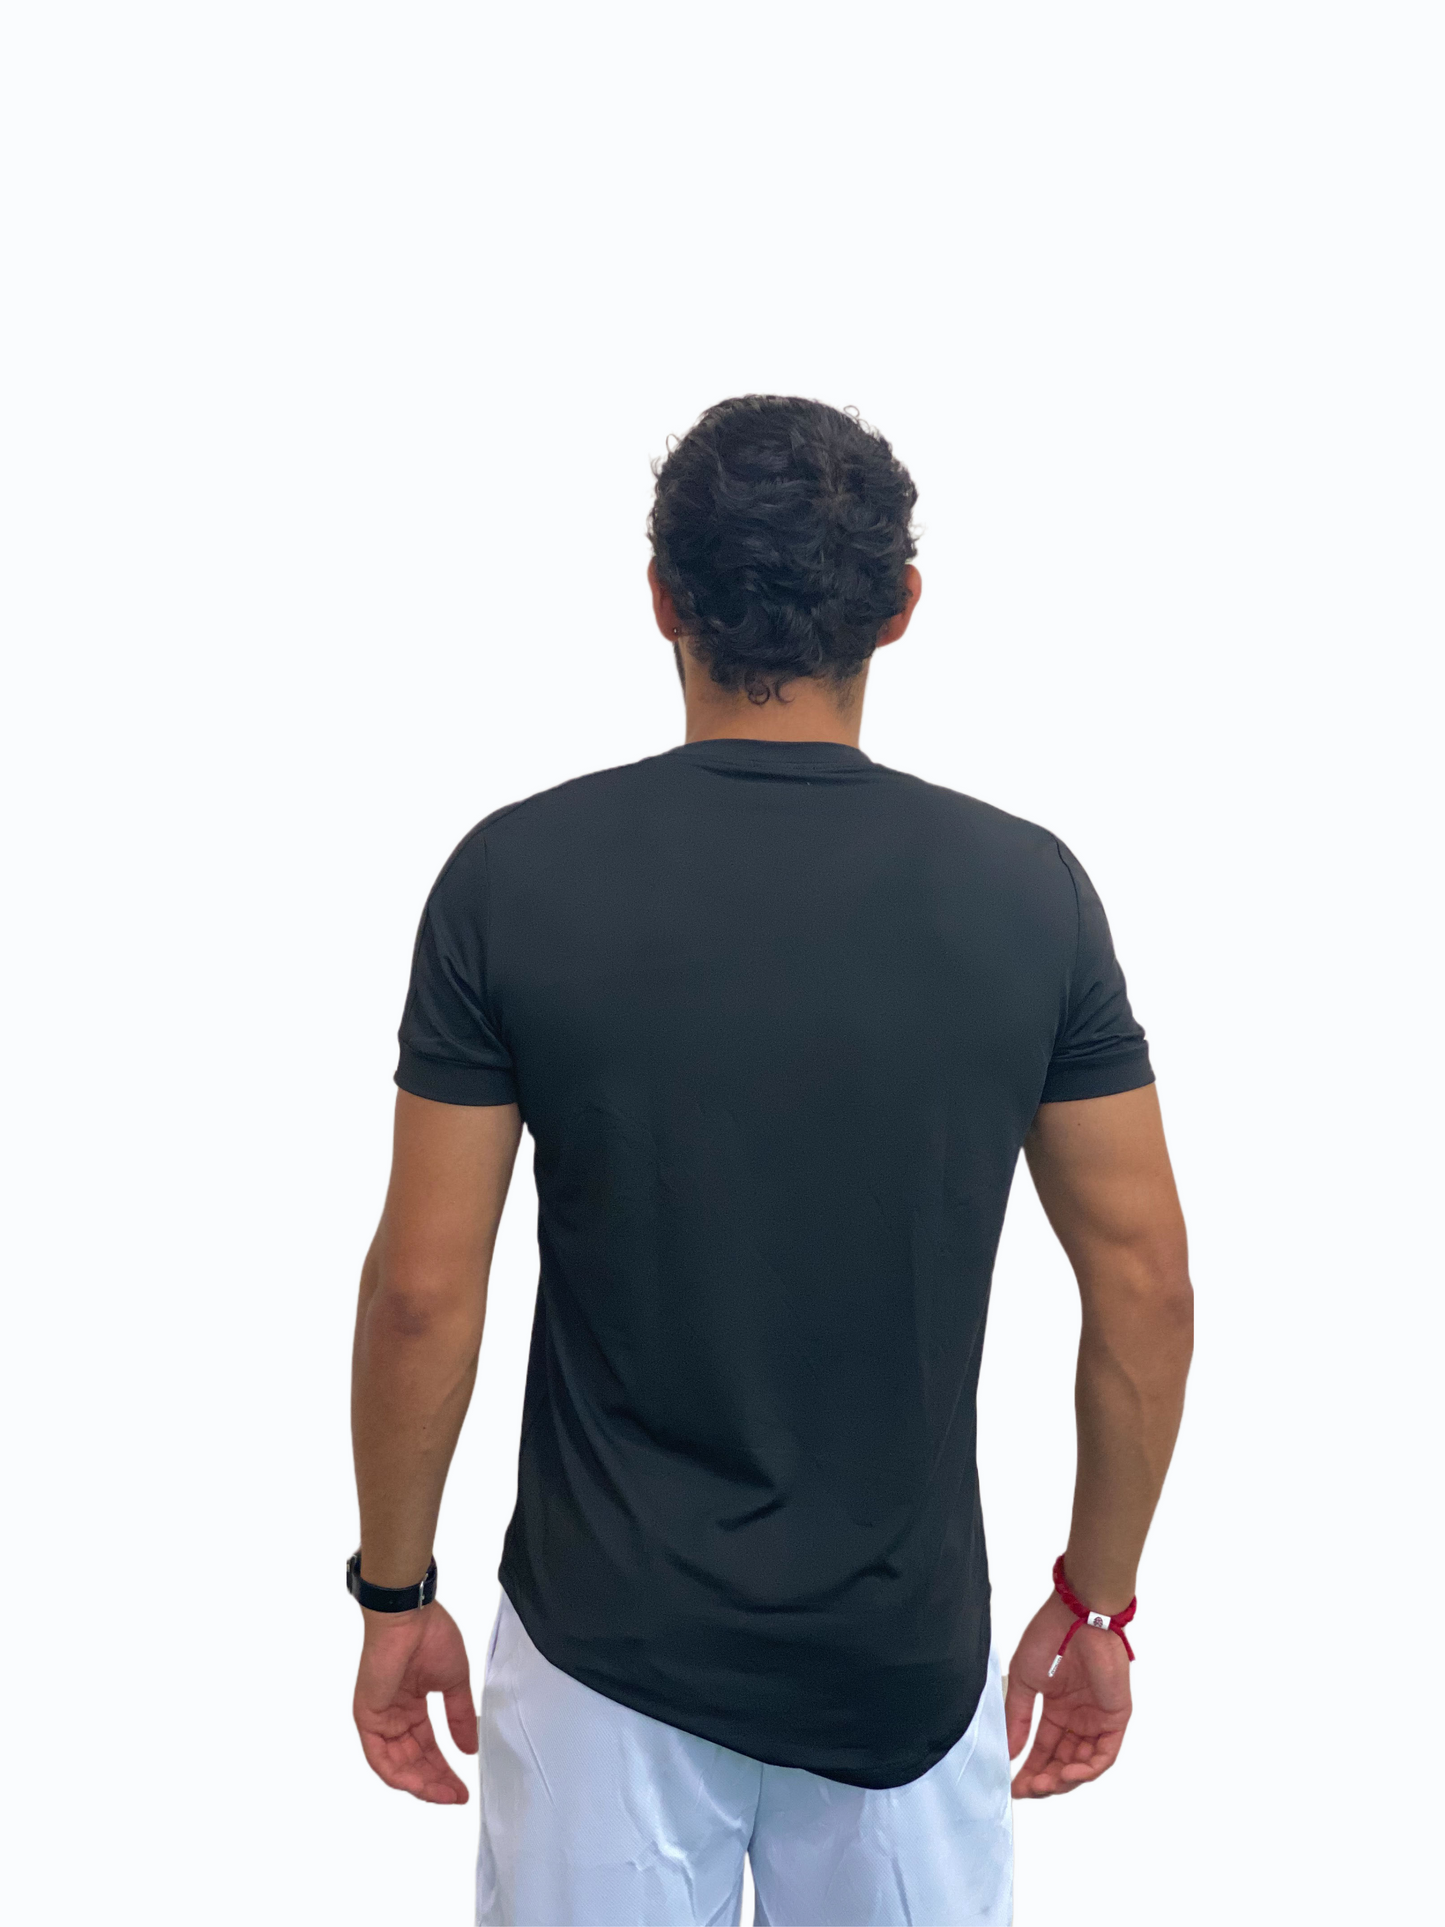 Men's Slim Fit Workout Top